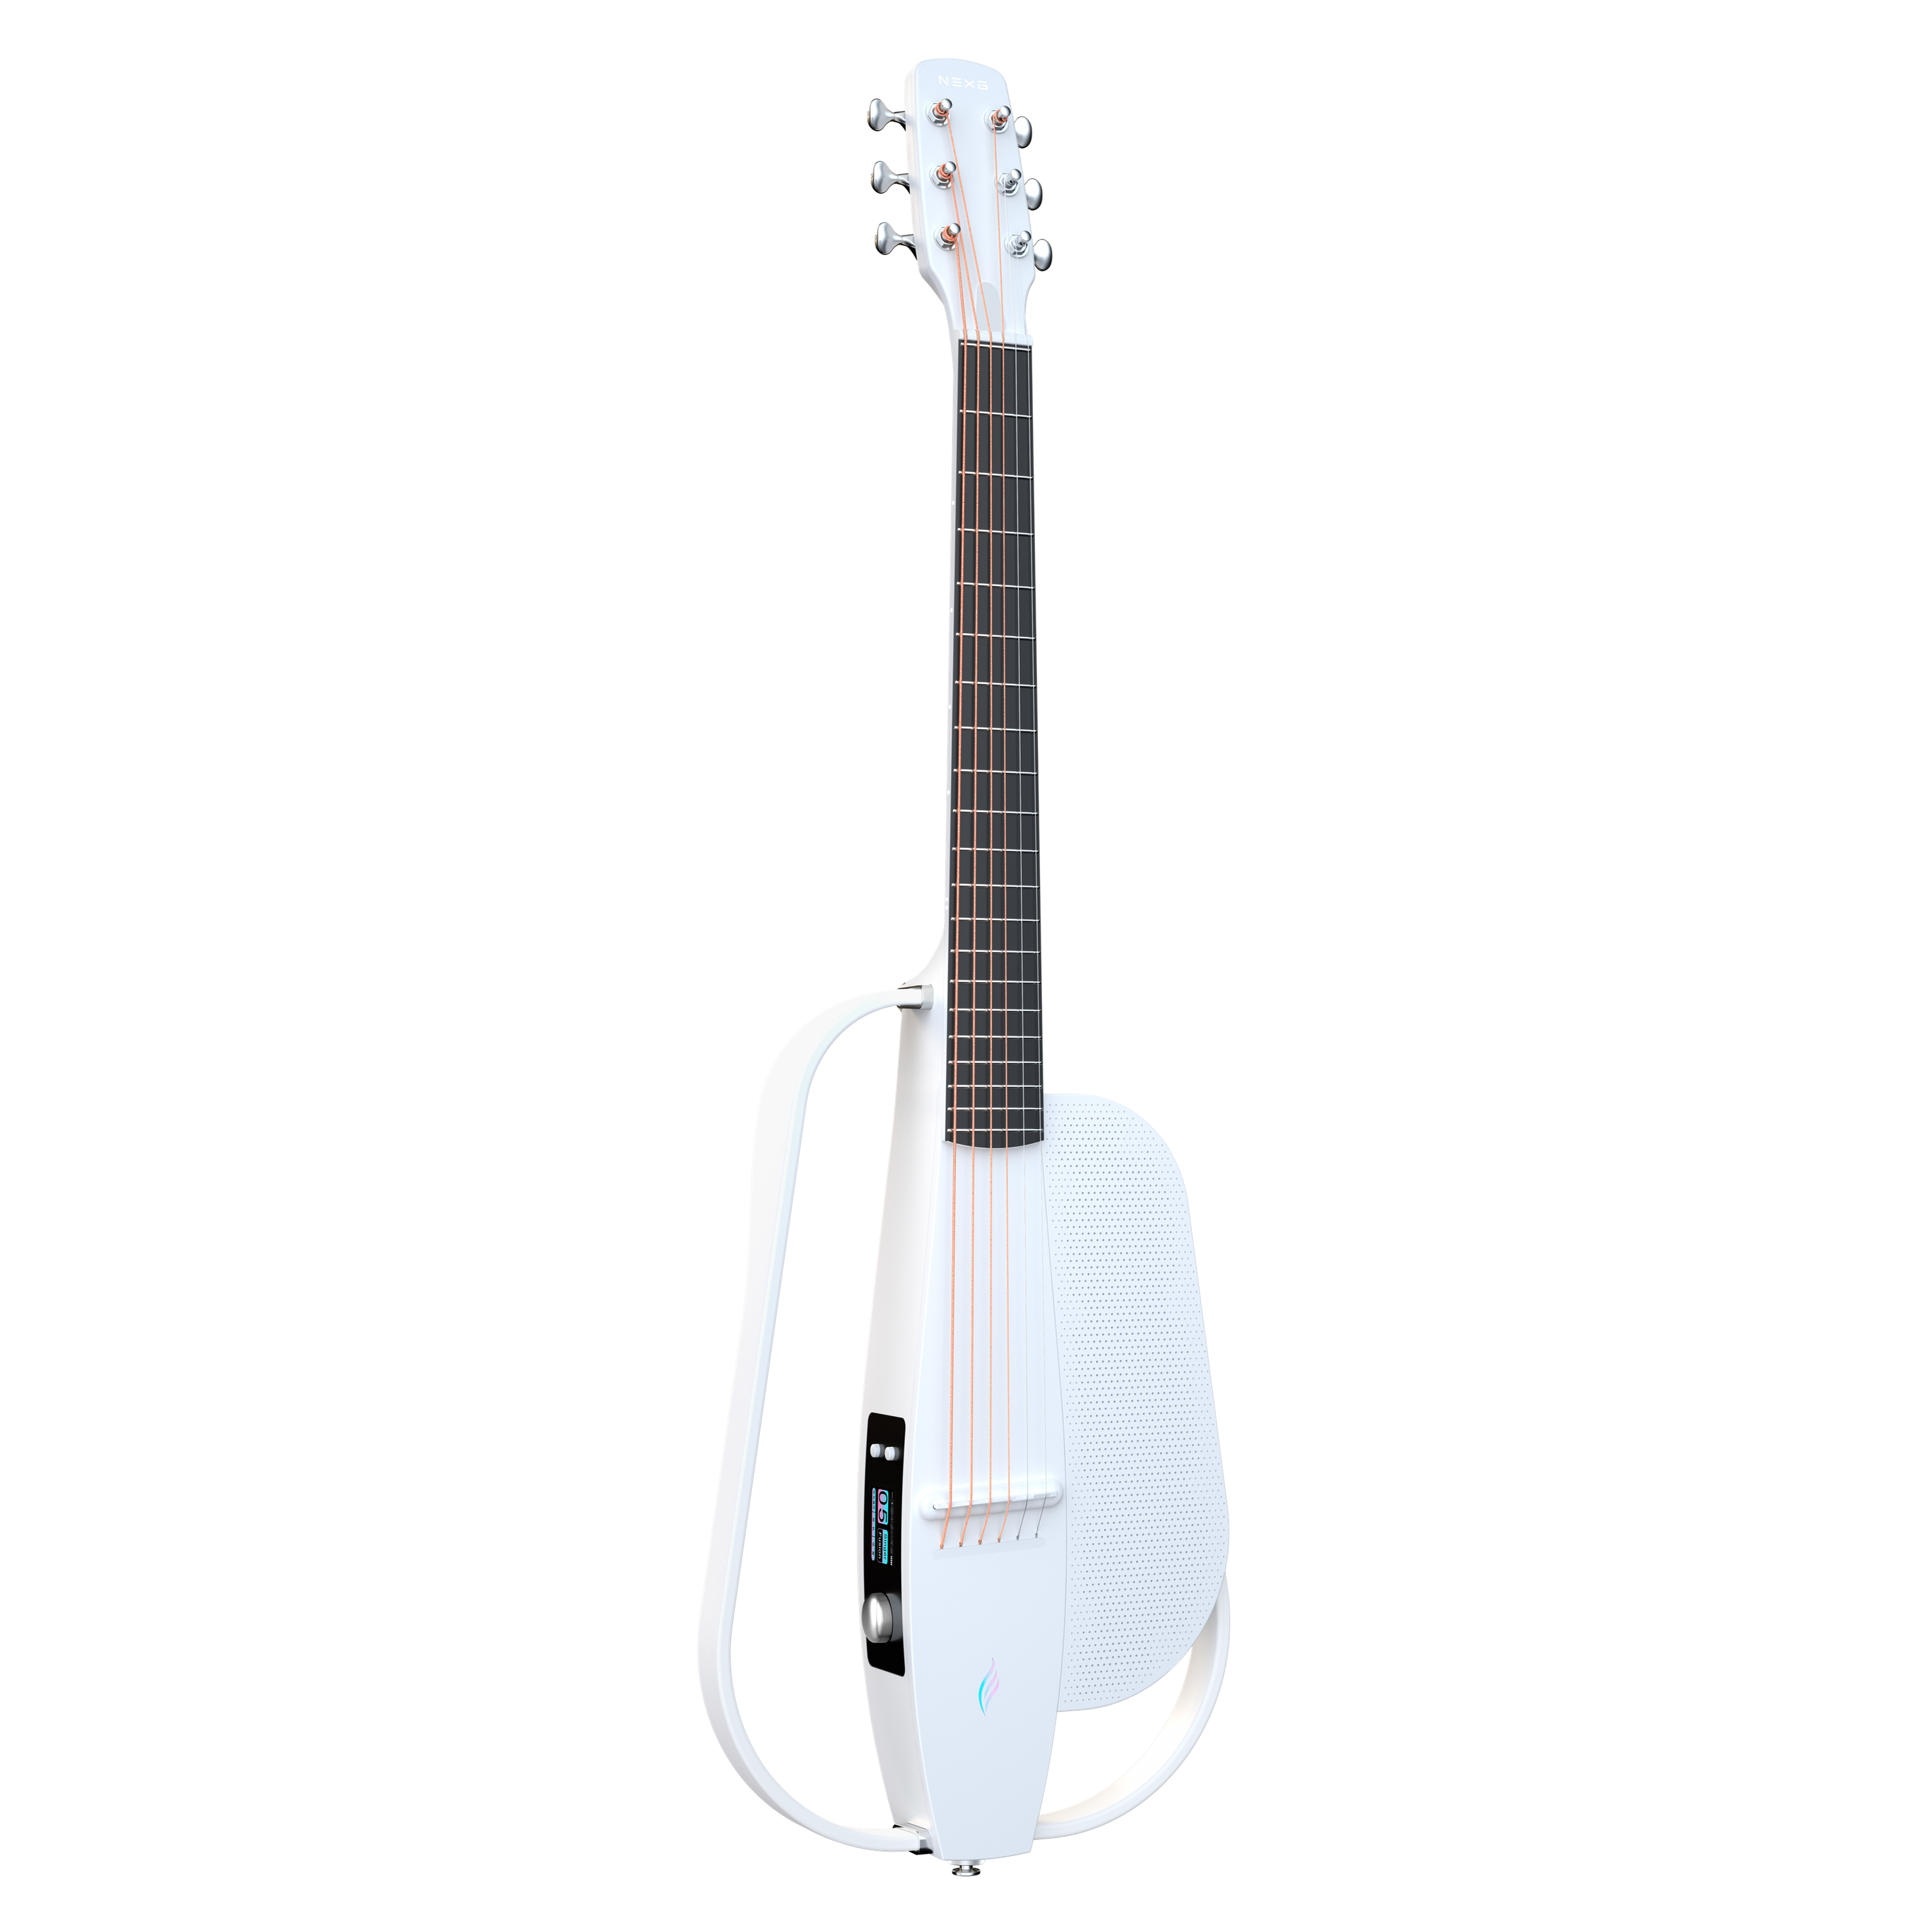 NEXG® 2, Luxy pack. The ultimate smart guitar sensation